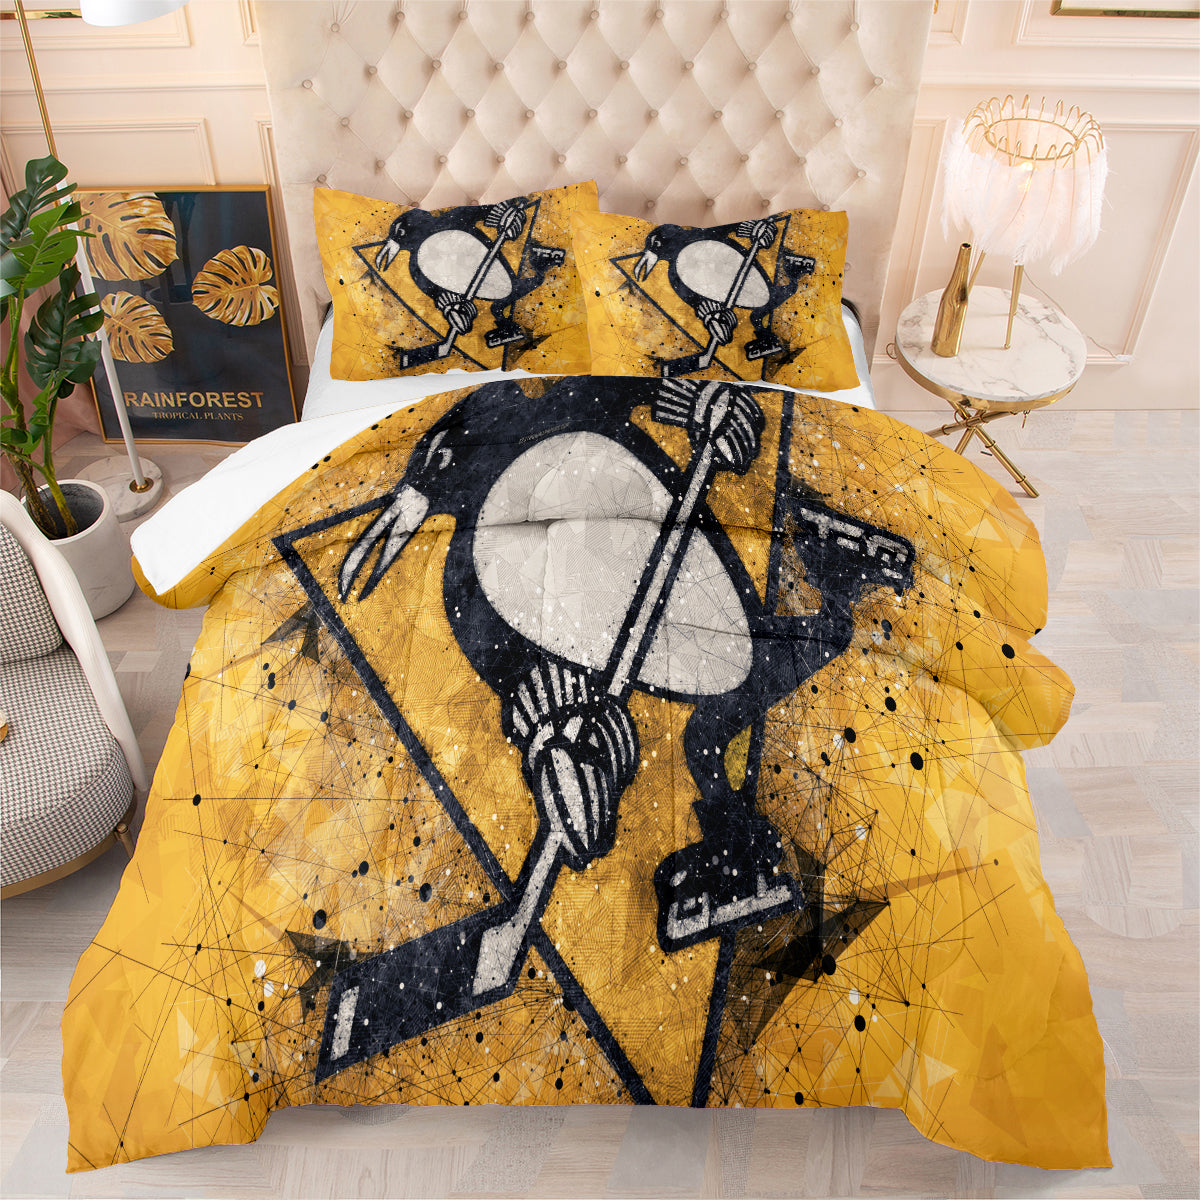 Pittsburgh Hockey Penguins Comforter Pillowcases 3PC Sets Blanket All Season Reversible Quilted Duvet